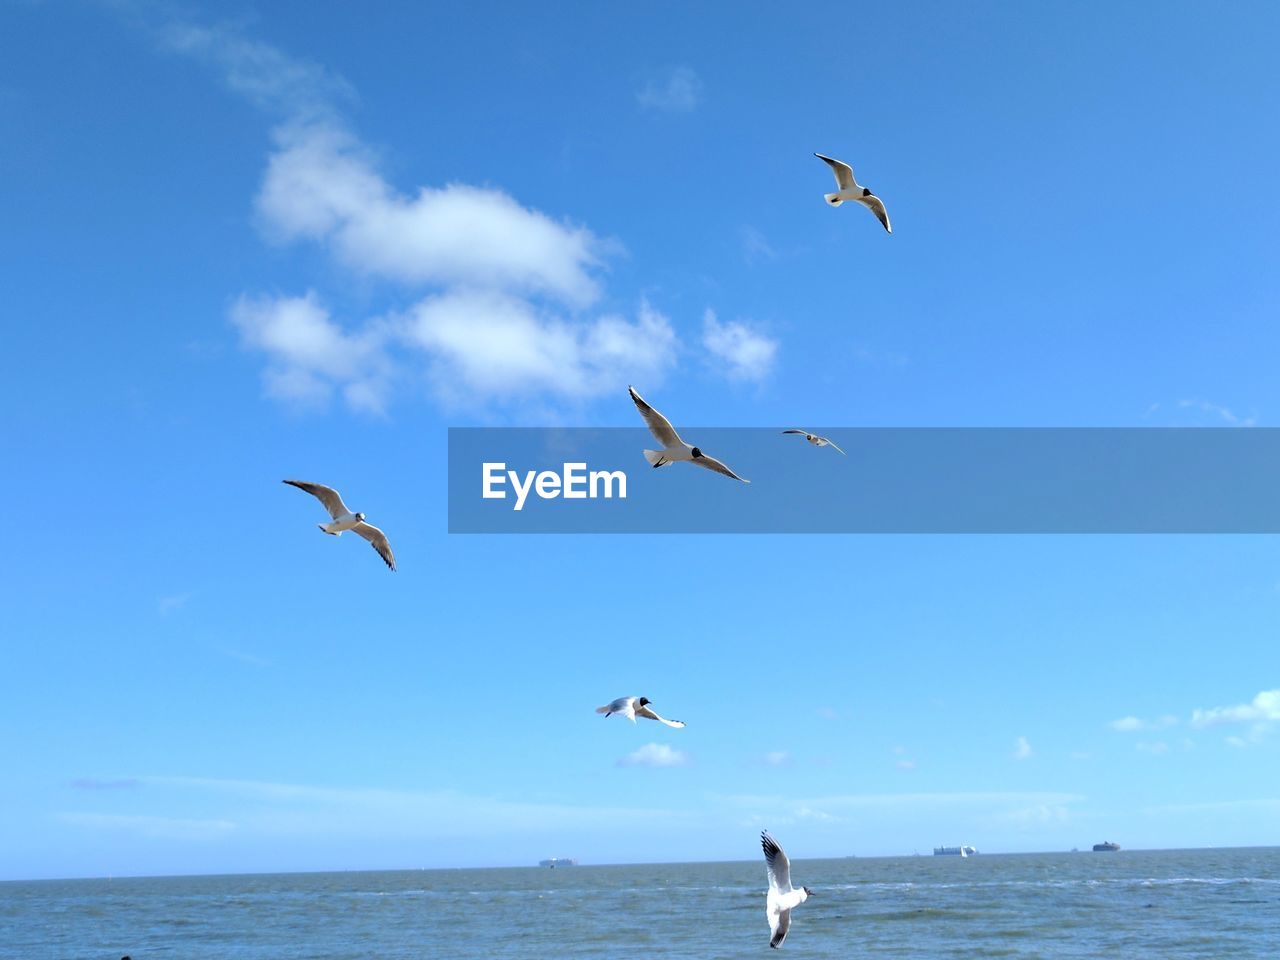 SEAGULLS FLYING OVER SEA AGAINST BLUE SKY